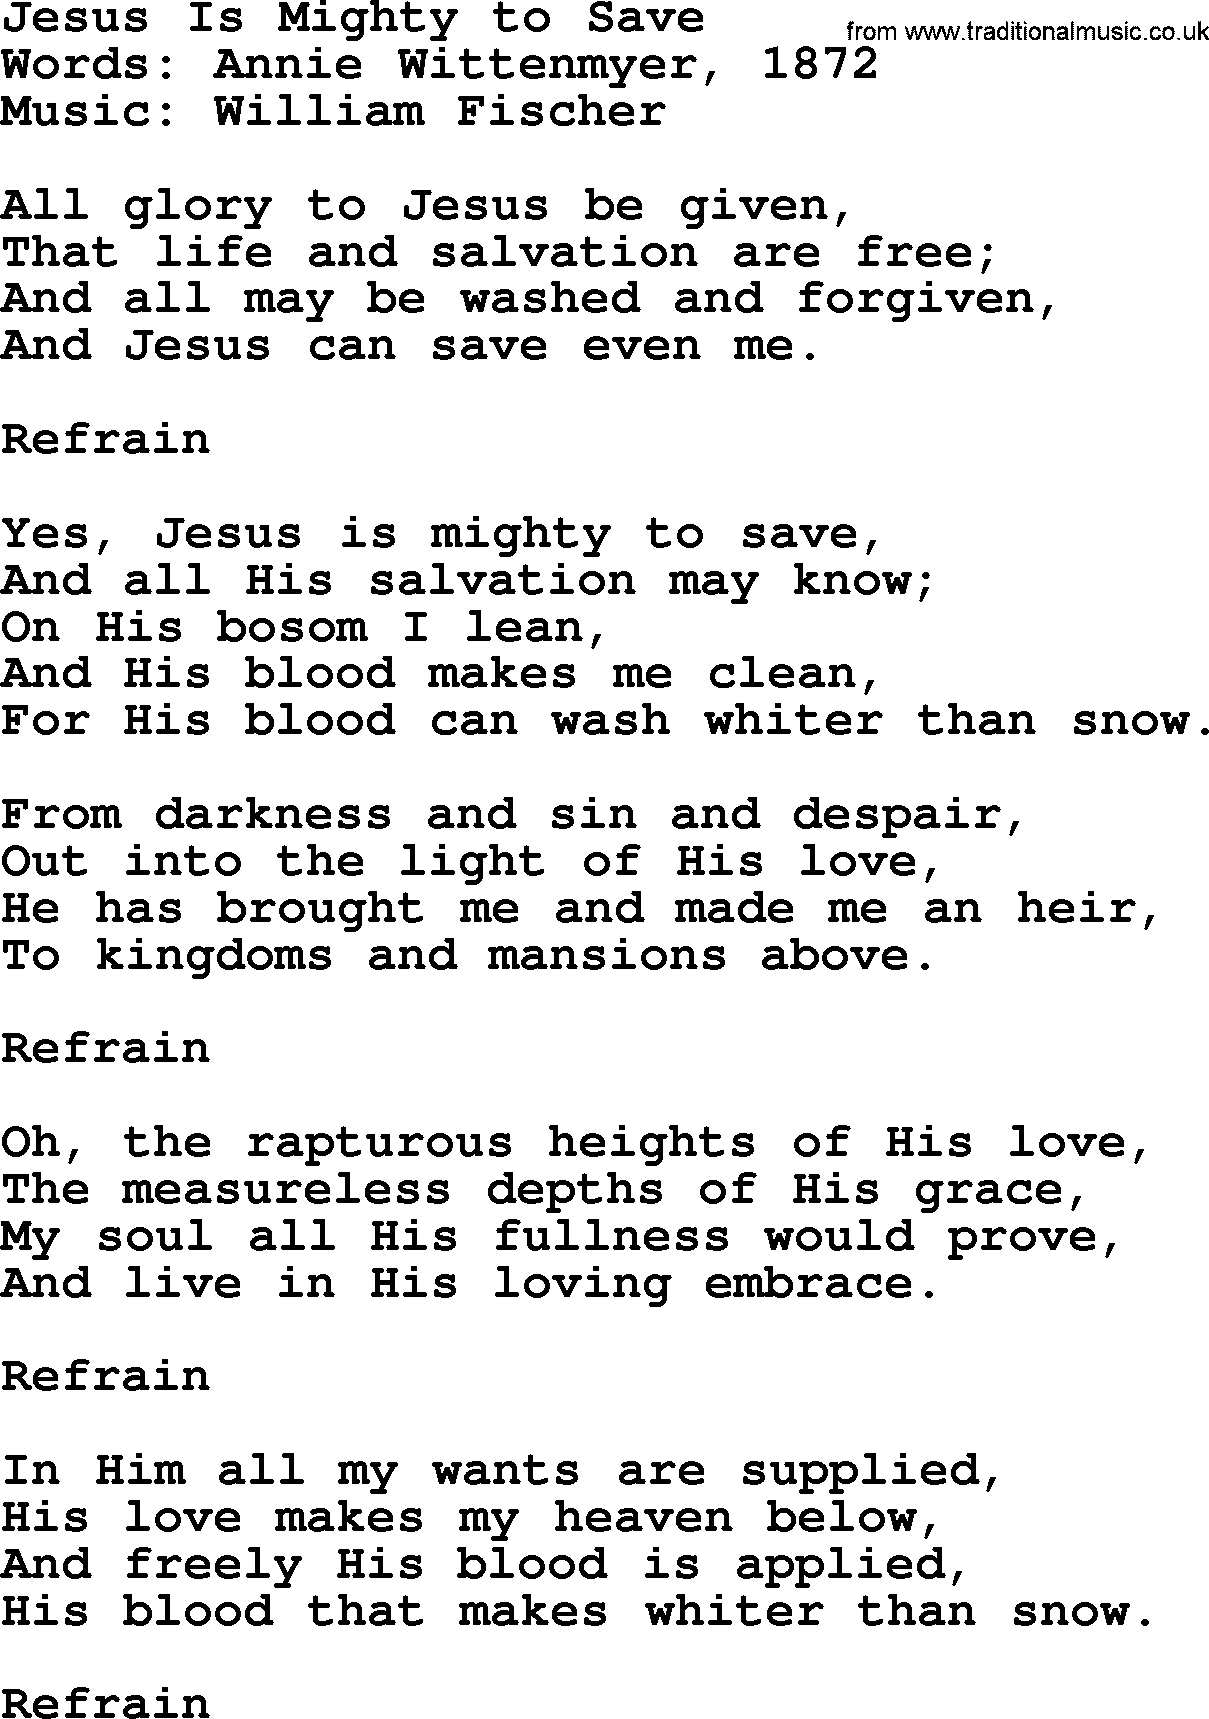 Forgiveness hymns, Hymn: Jesus Is Mighty To Save, lyrics with PDF